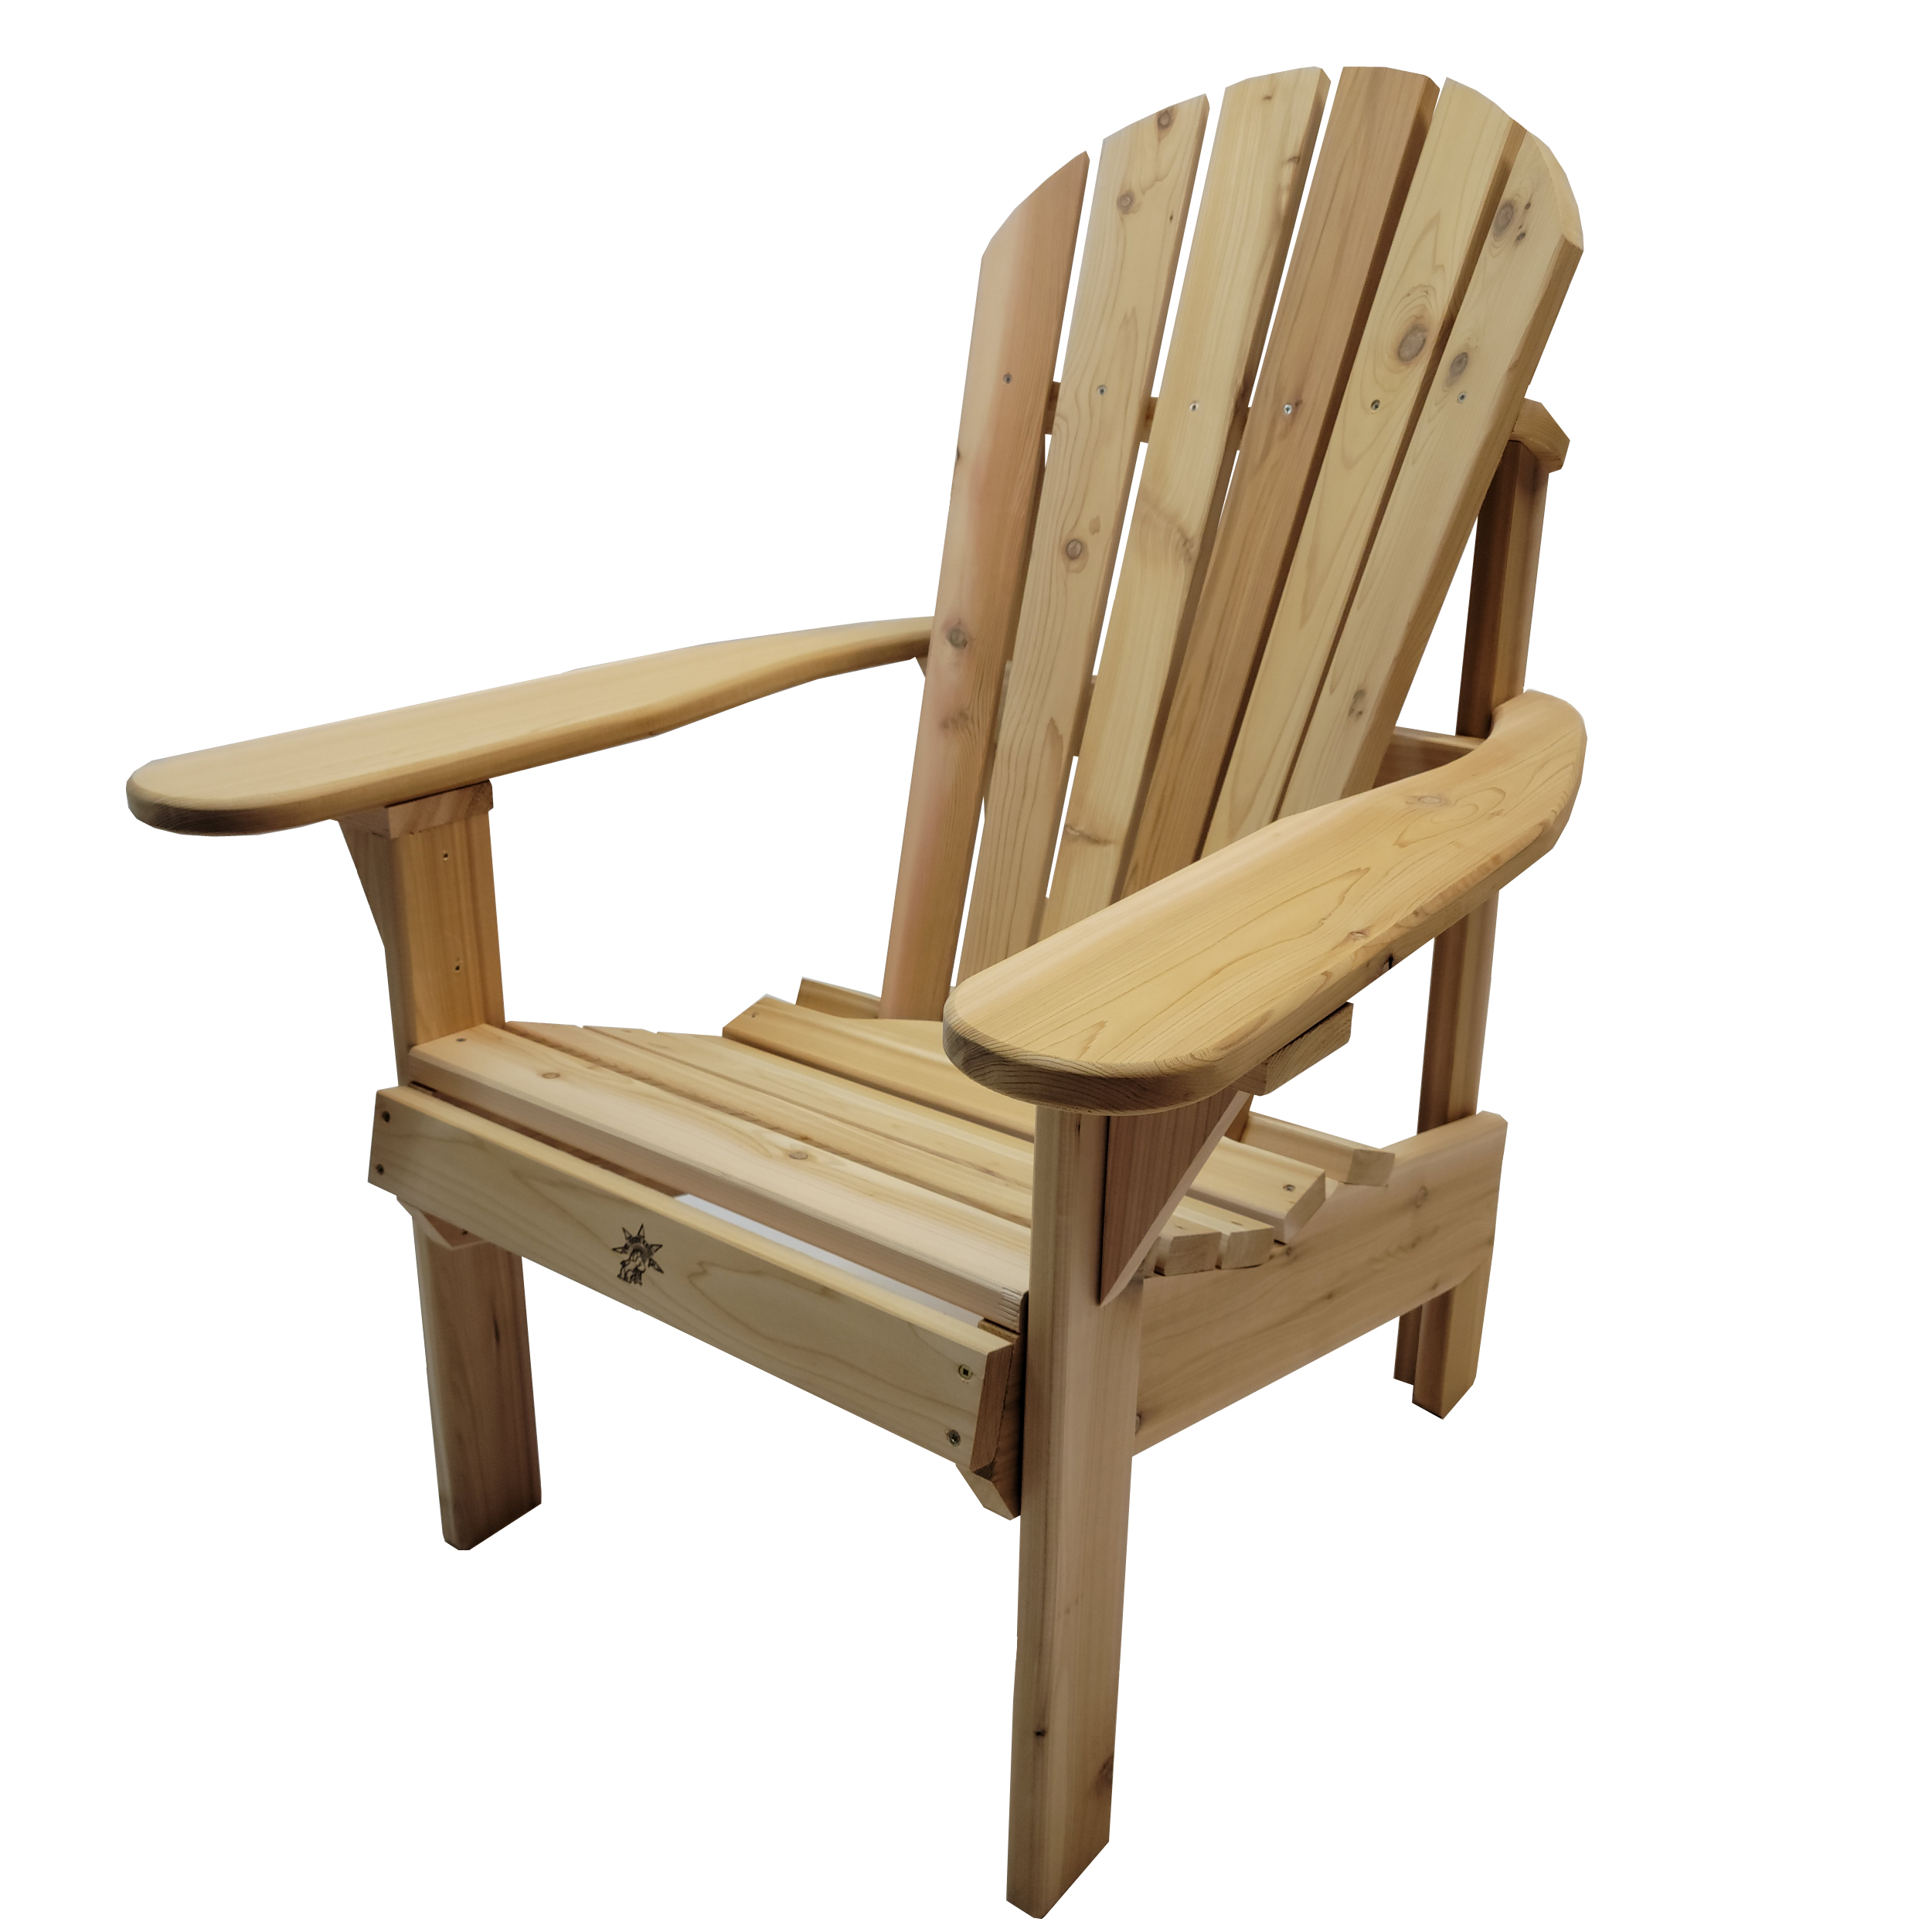 Upright Muskoka Chair, Knotty Cedar